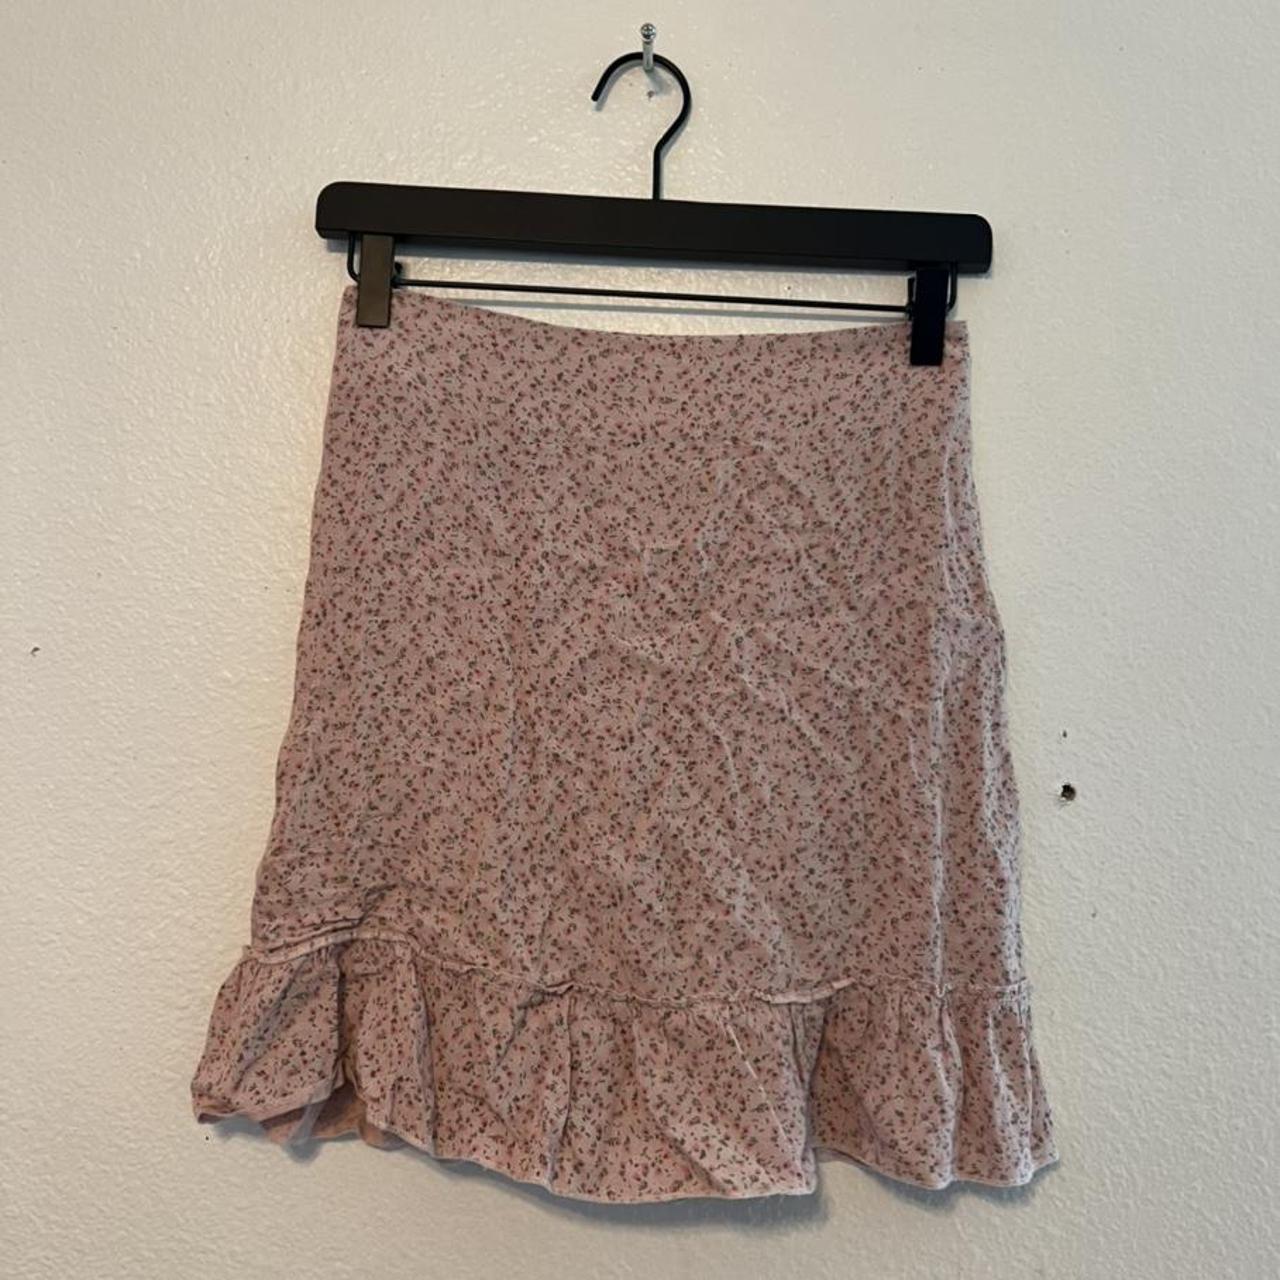 Brandy Melville pink floral skirt. Super cute with a... - Depop